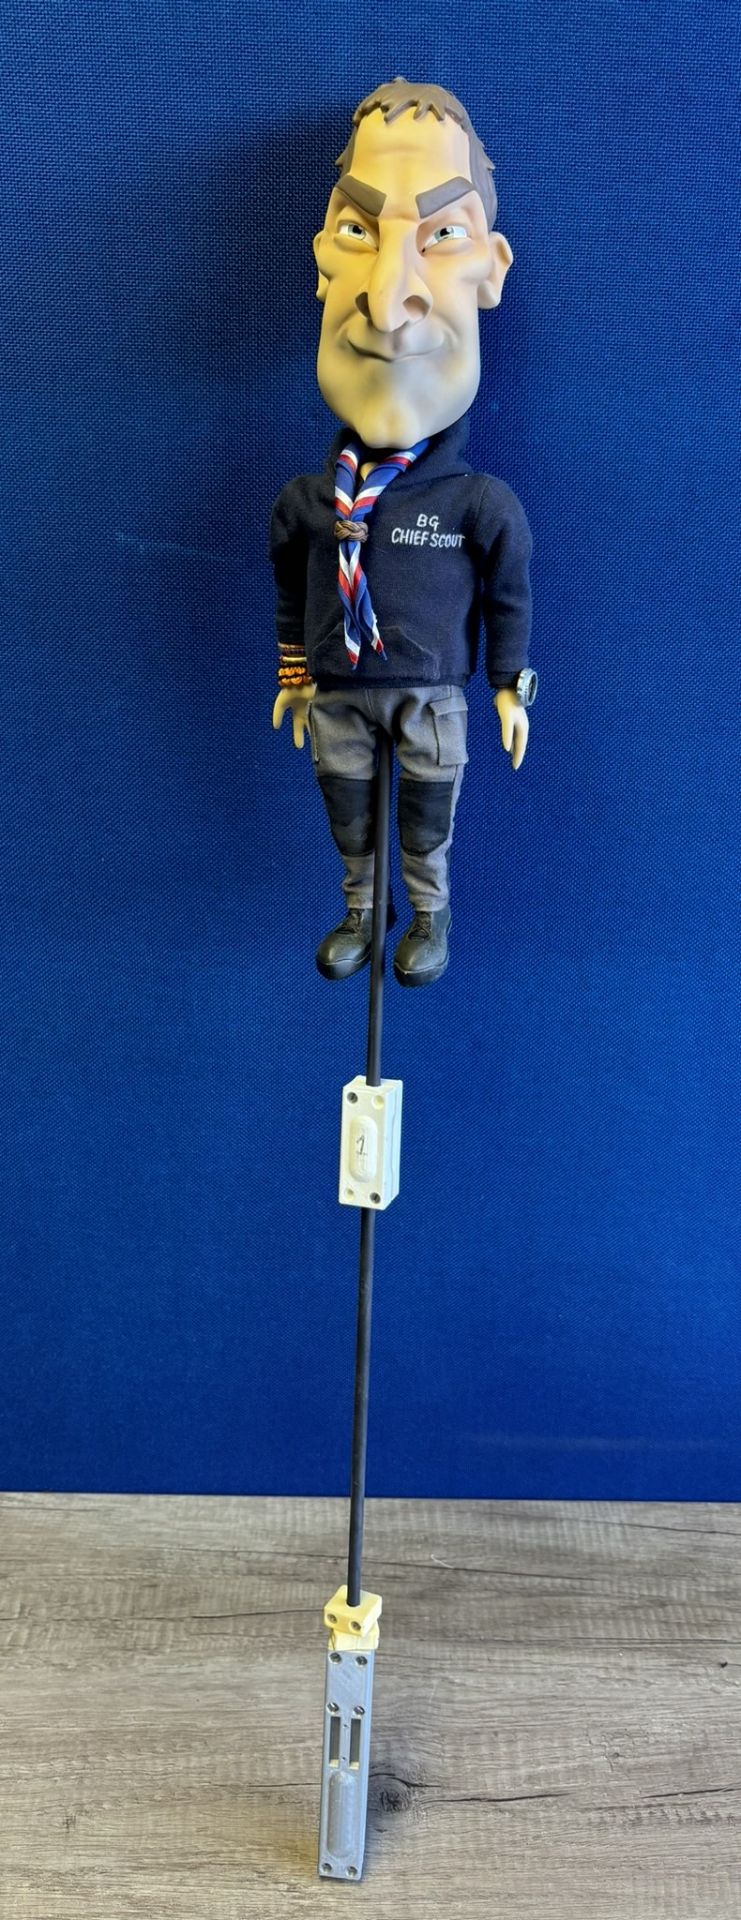 Newzoid puppet - Bear Grylls - Image 3 of 4